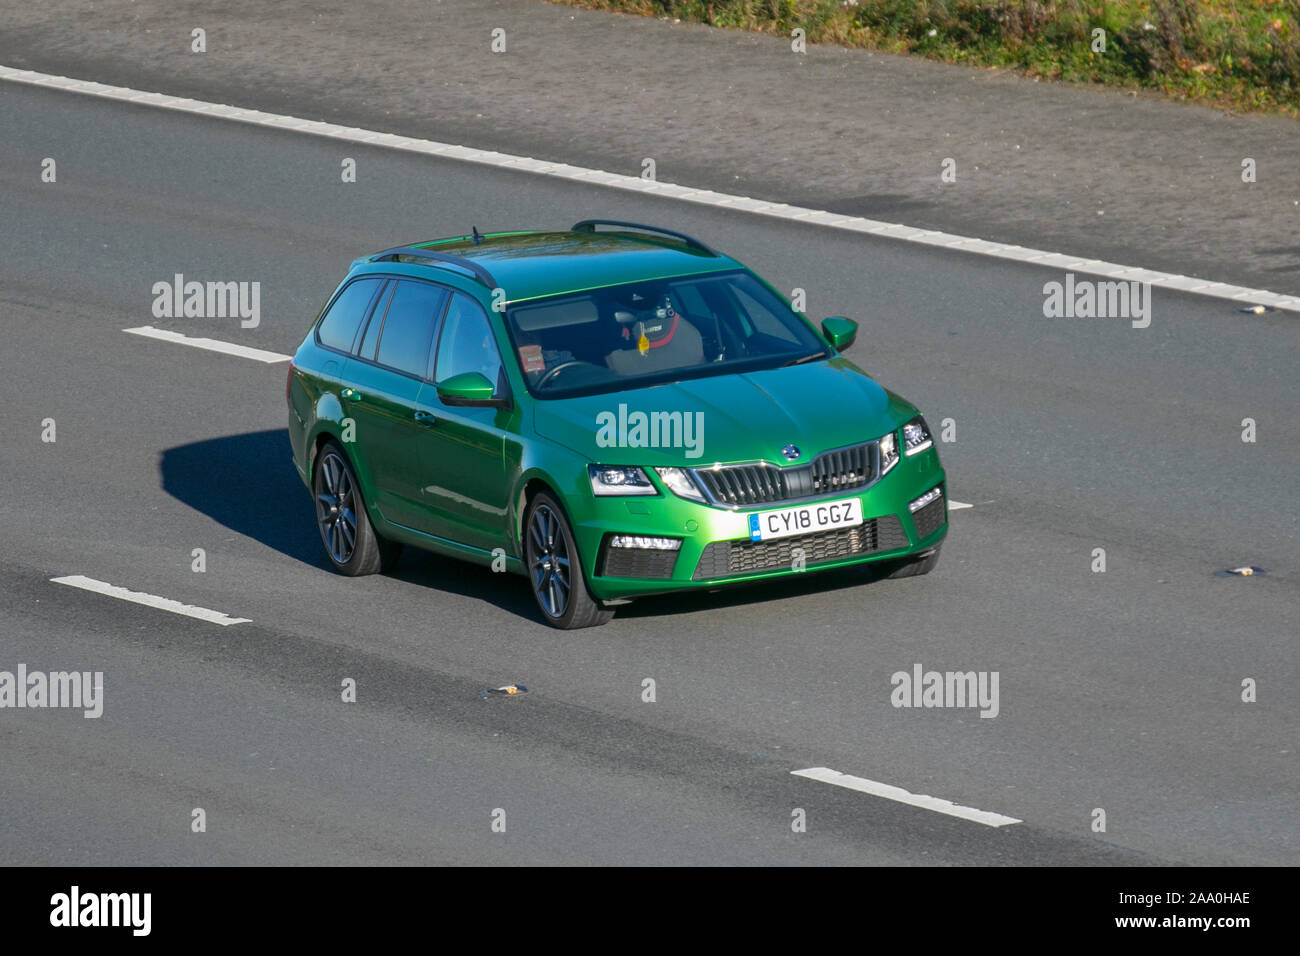 2018 green Škoda Octavia VRS TDI; UK Vehicular traffic, transport, modern vehicles, saloon cars, south-bound motoring on the 3 lane M6 motorway highway. Stock Photo